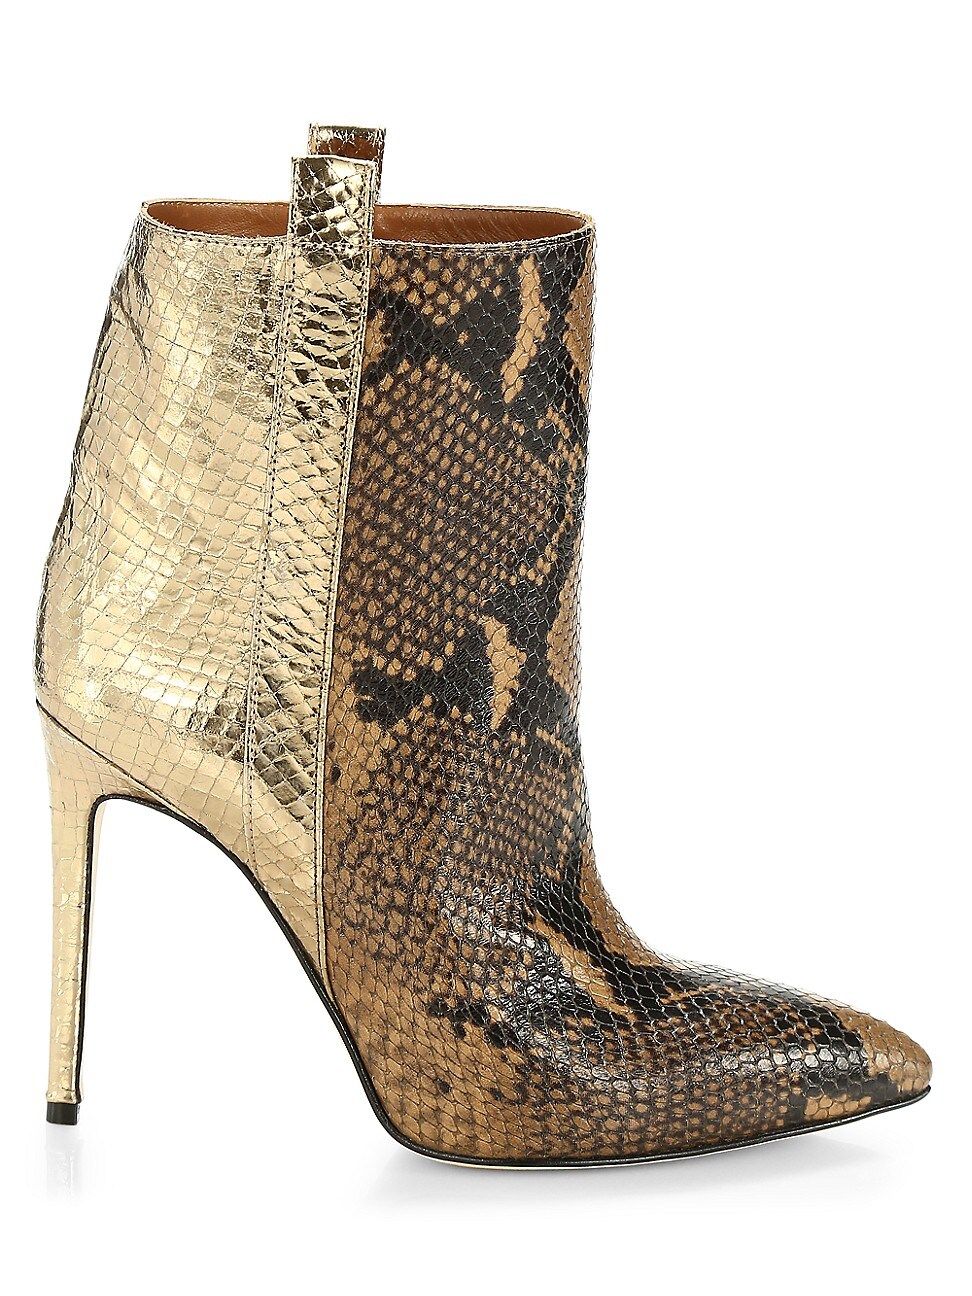 Paris Texas Women's Metallic Snakeskin-Embossed Leather Booties - Camel - Size 35 (5) | Saks Fifth Avenue